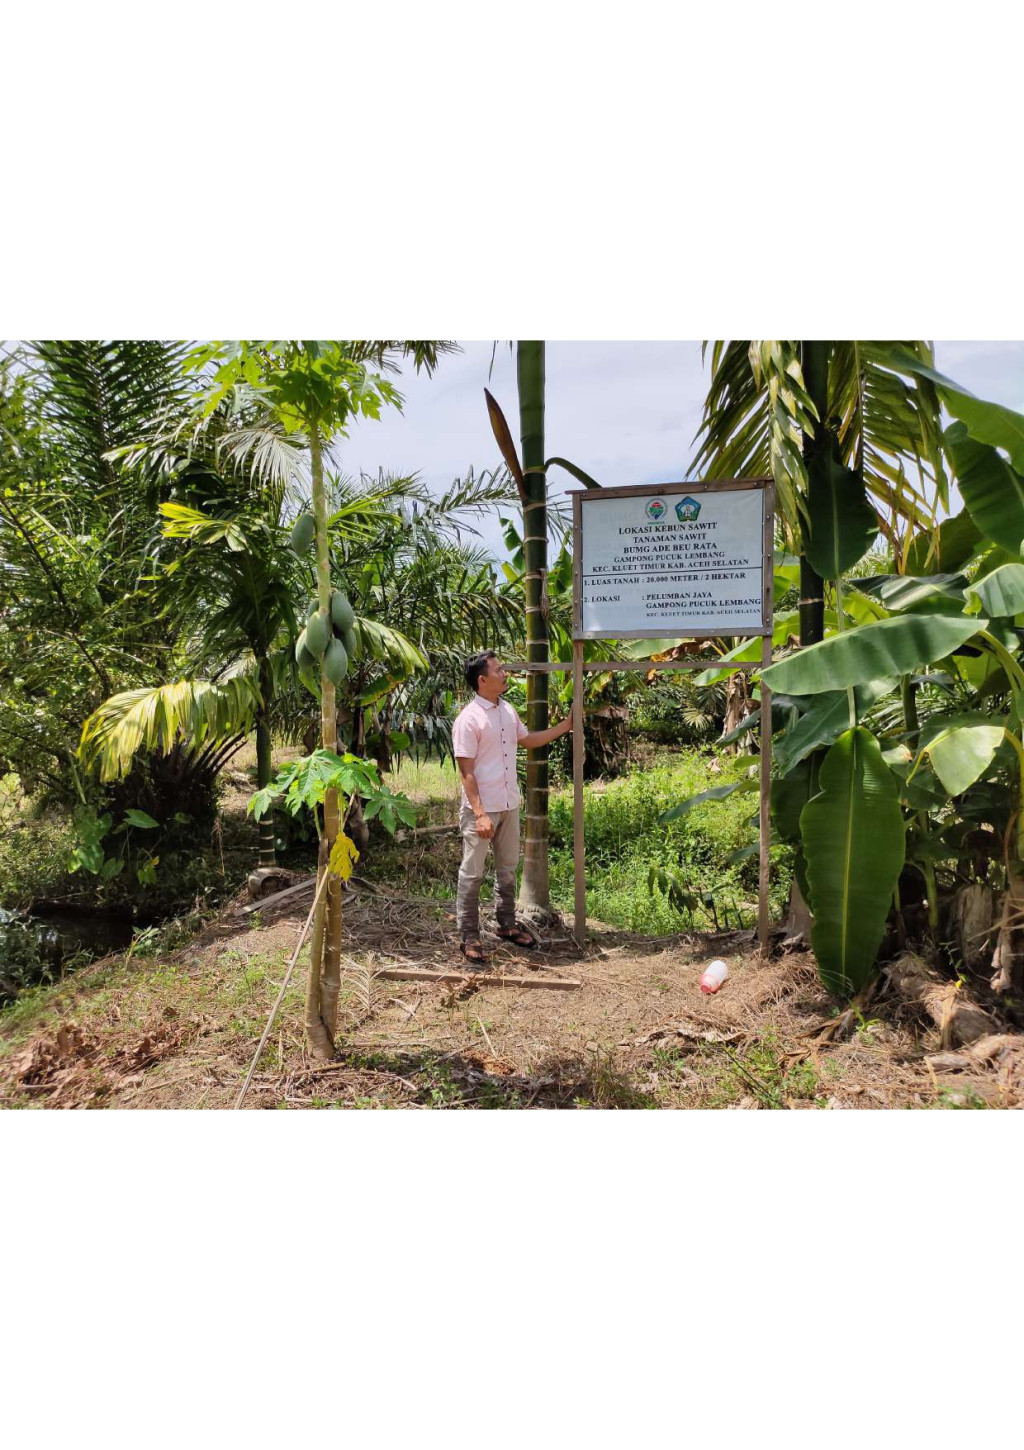 Kebun Sawit Milik BUMG “Ade Beurata" Gampong Pucuk Lembang Seluas 6 Ha